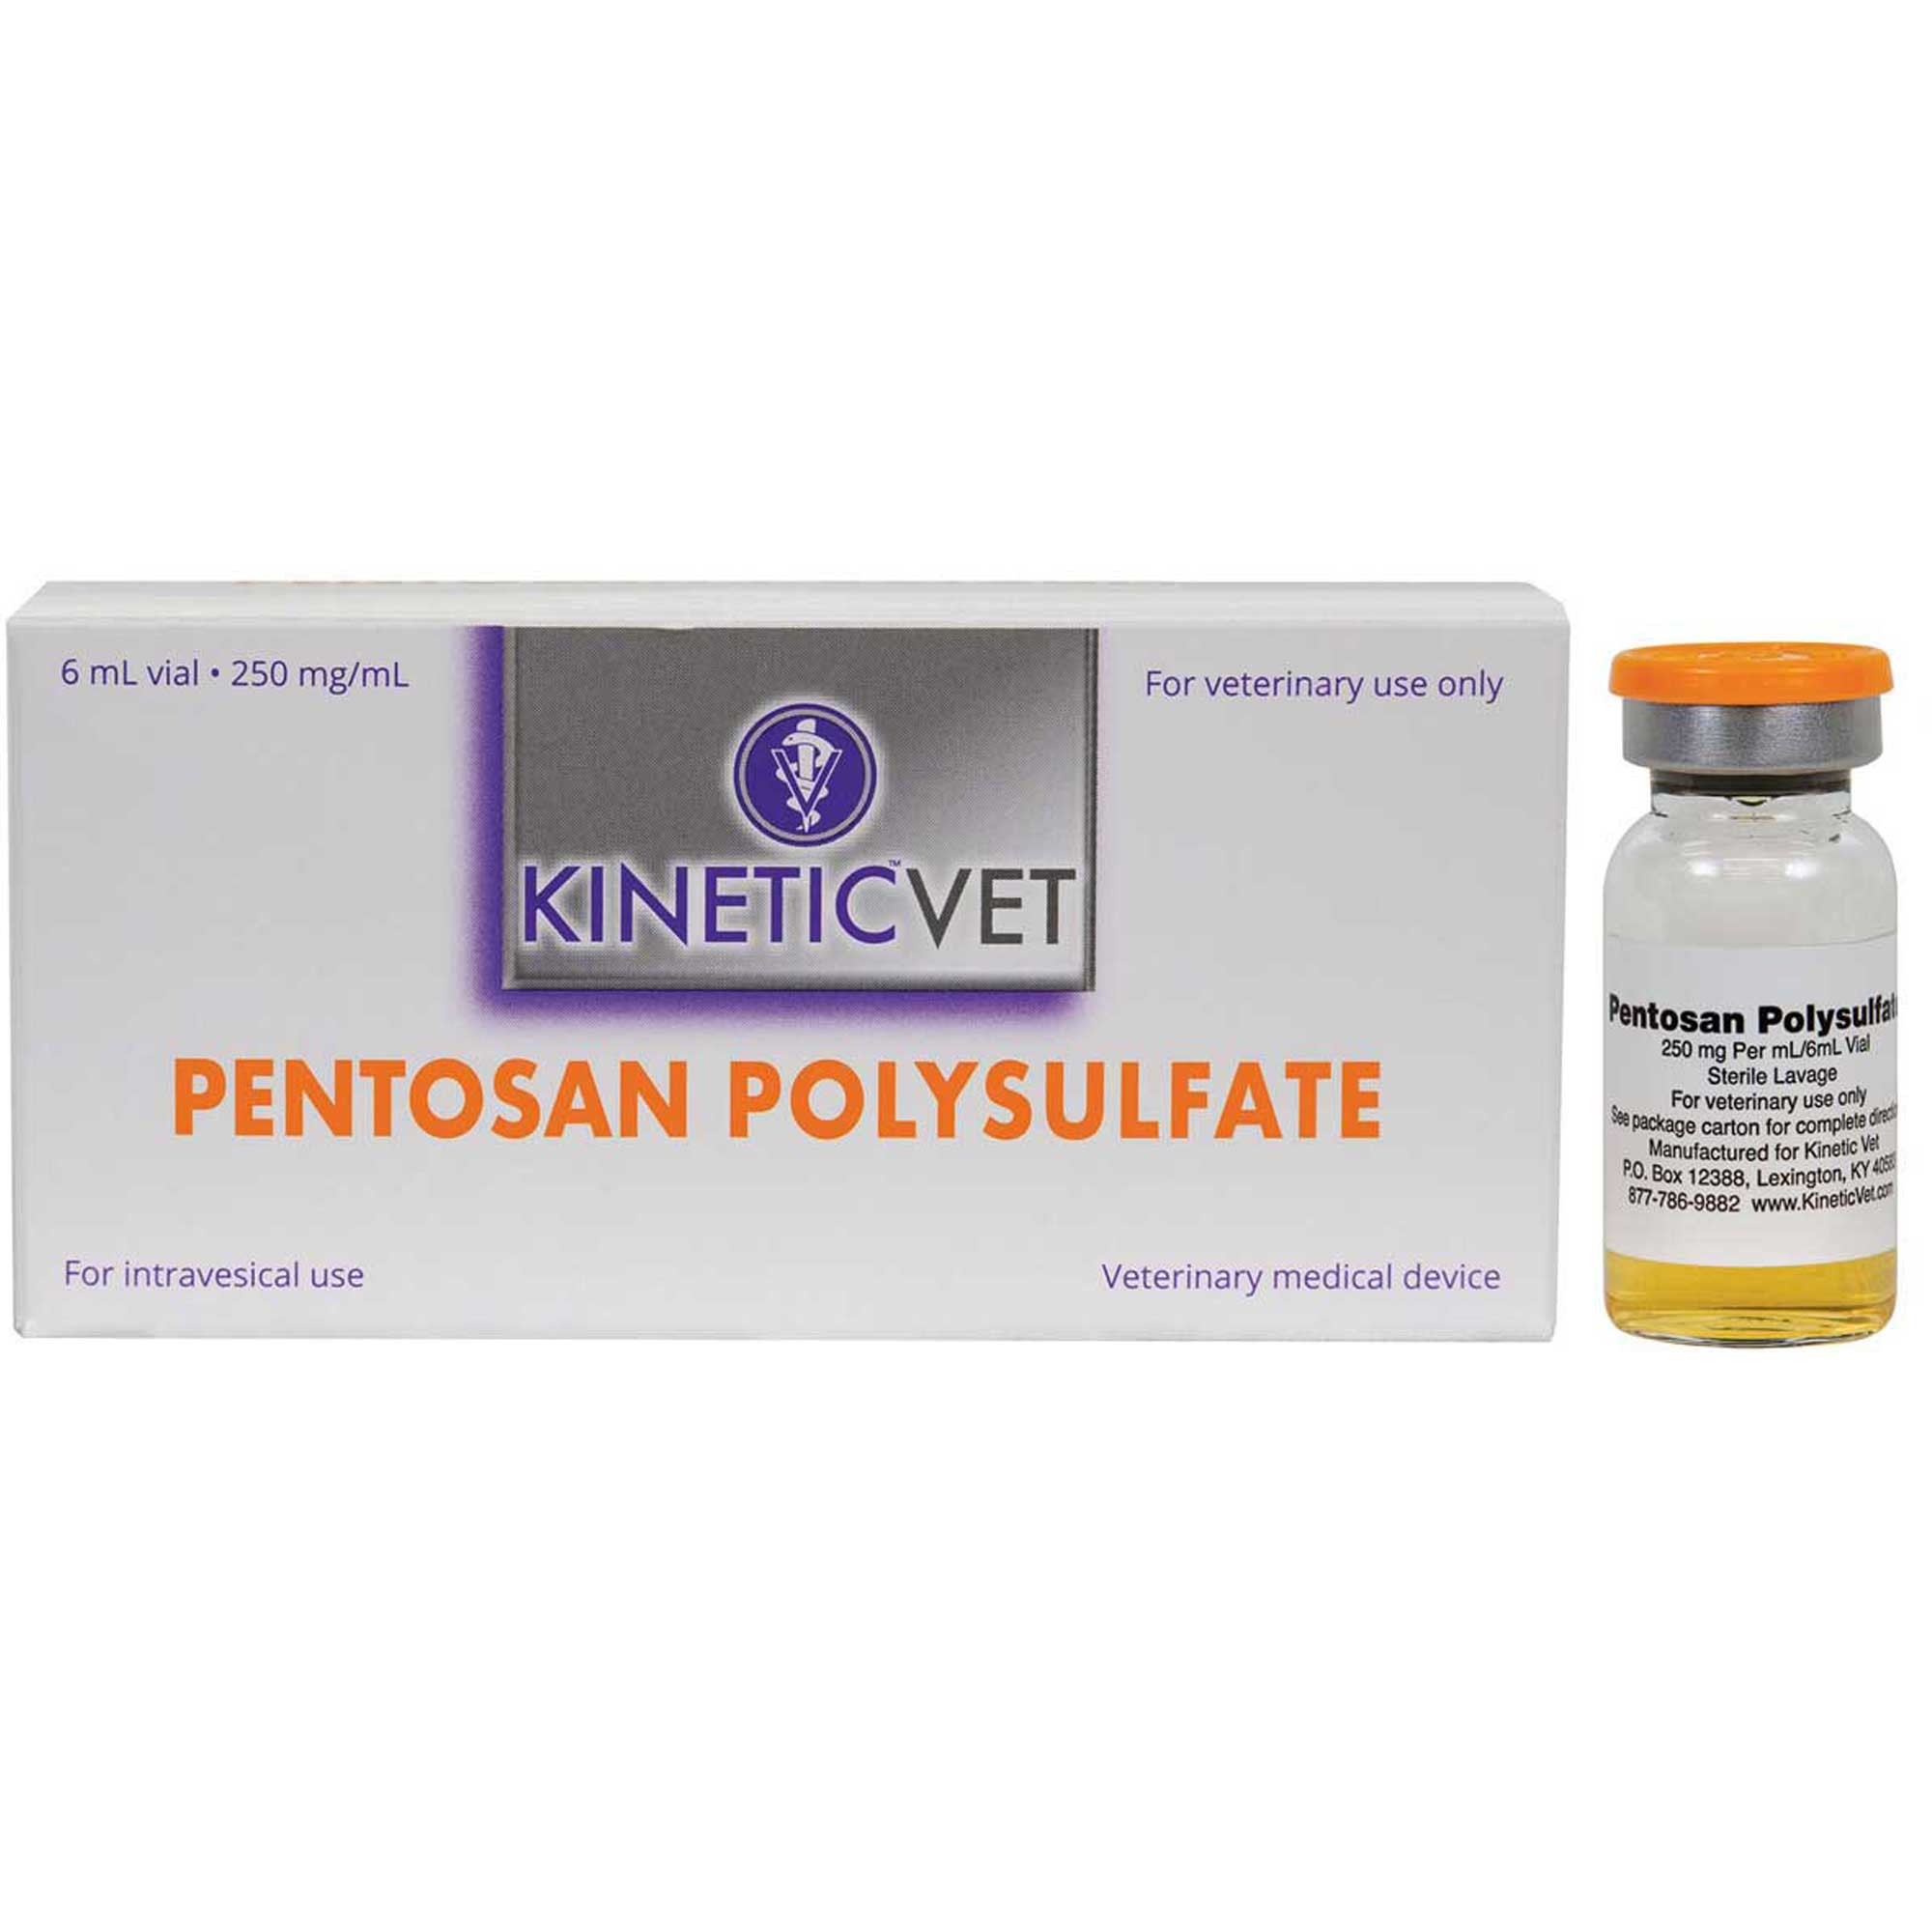 Pentosan Polysulfate Usage